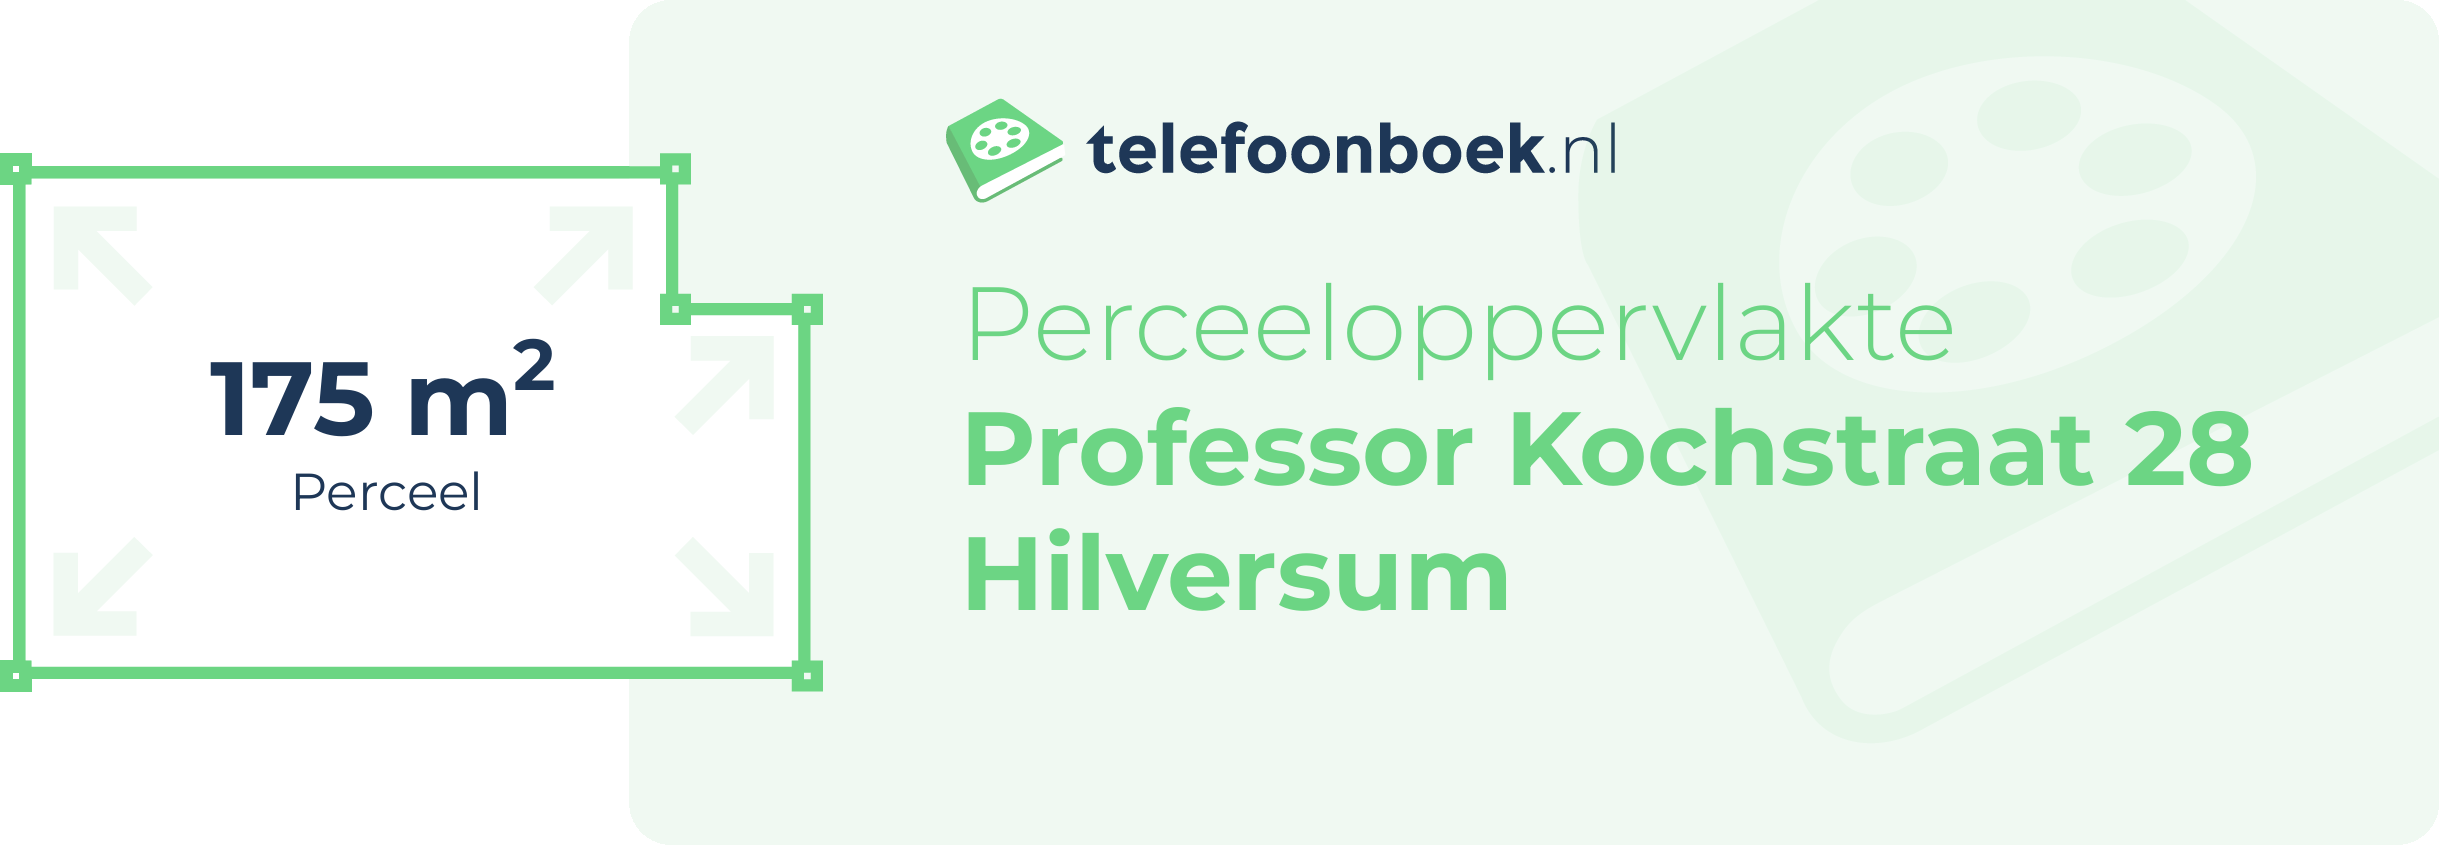 Perceeloppervlakte Professor Kochstraat 28 Hilversum